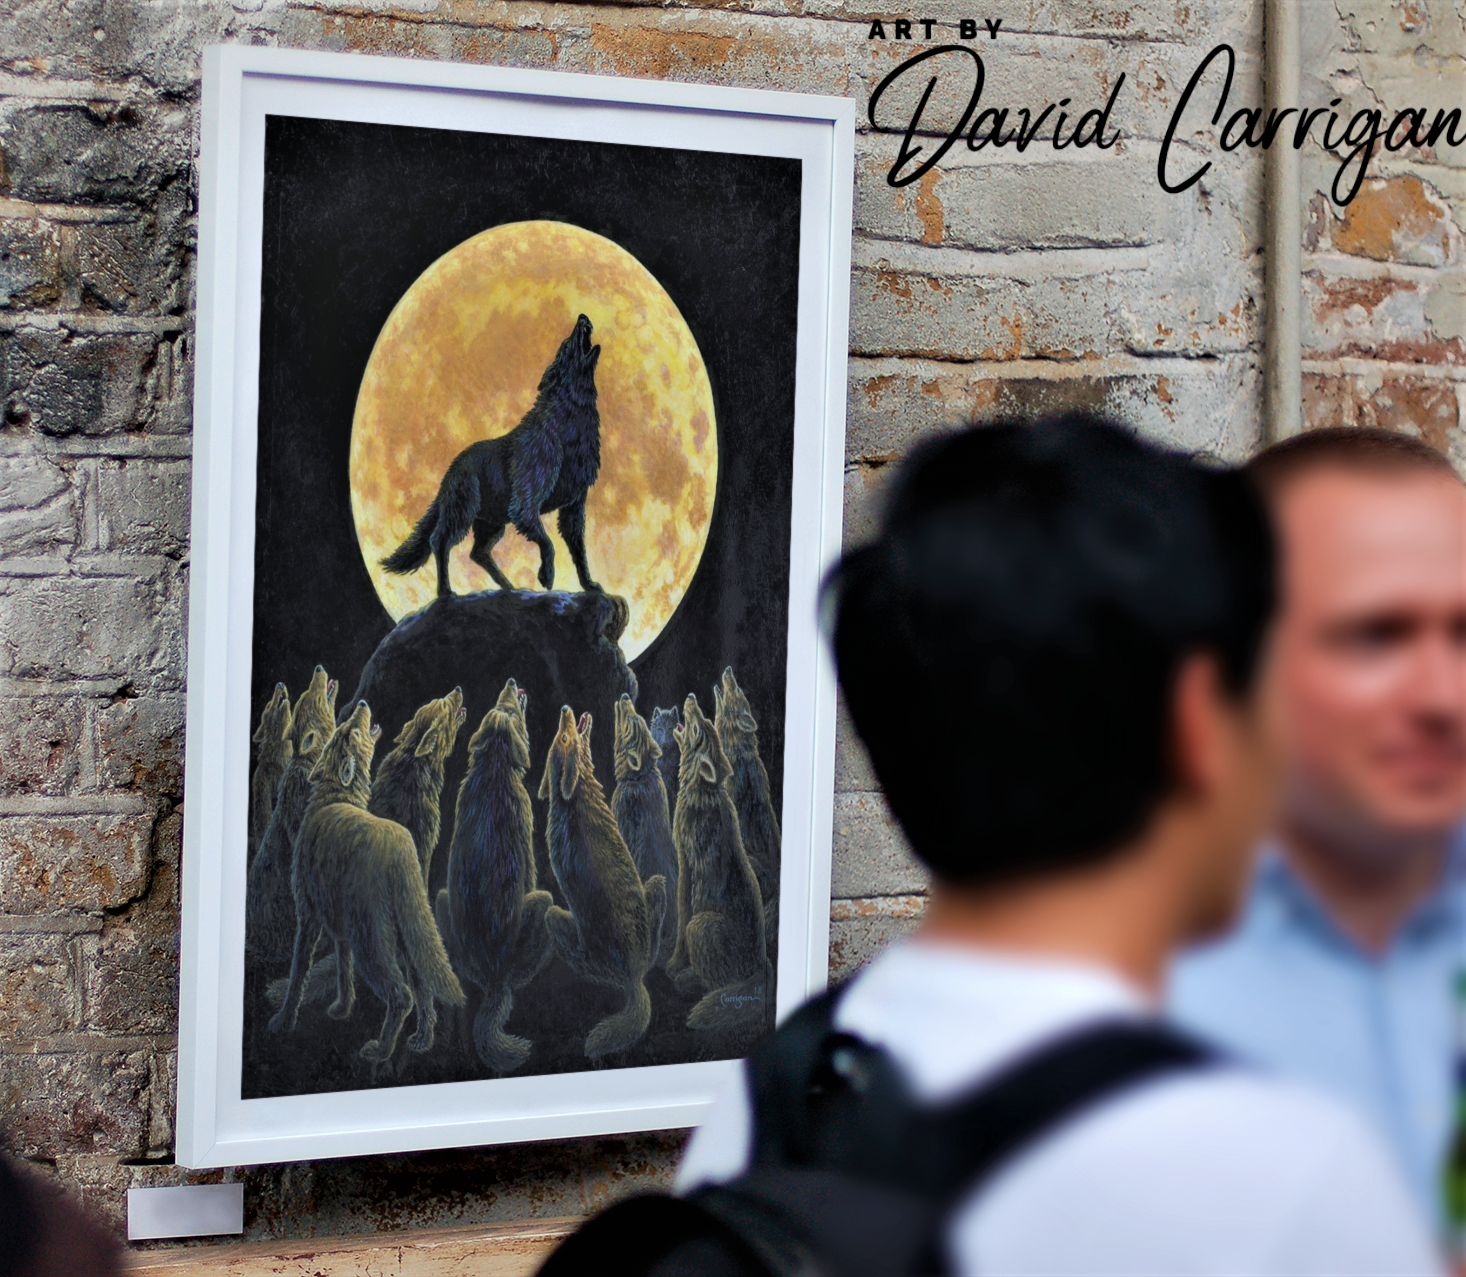 Moonlight Serenade, Premium Howling Wolves Giclee Print by David Carrigan.